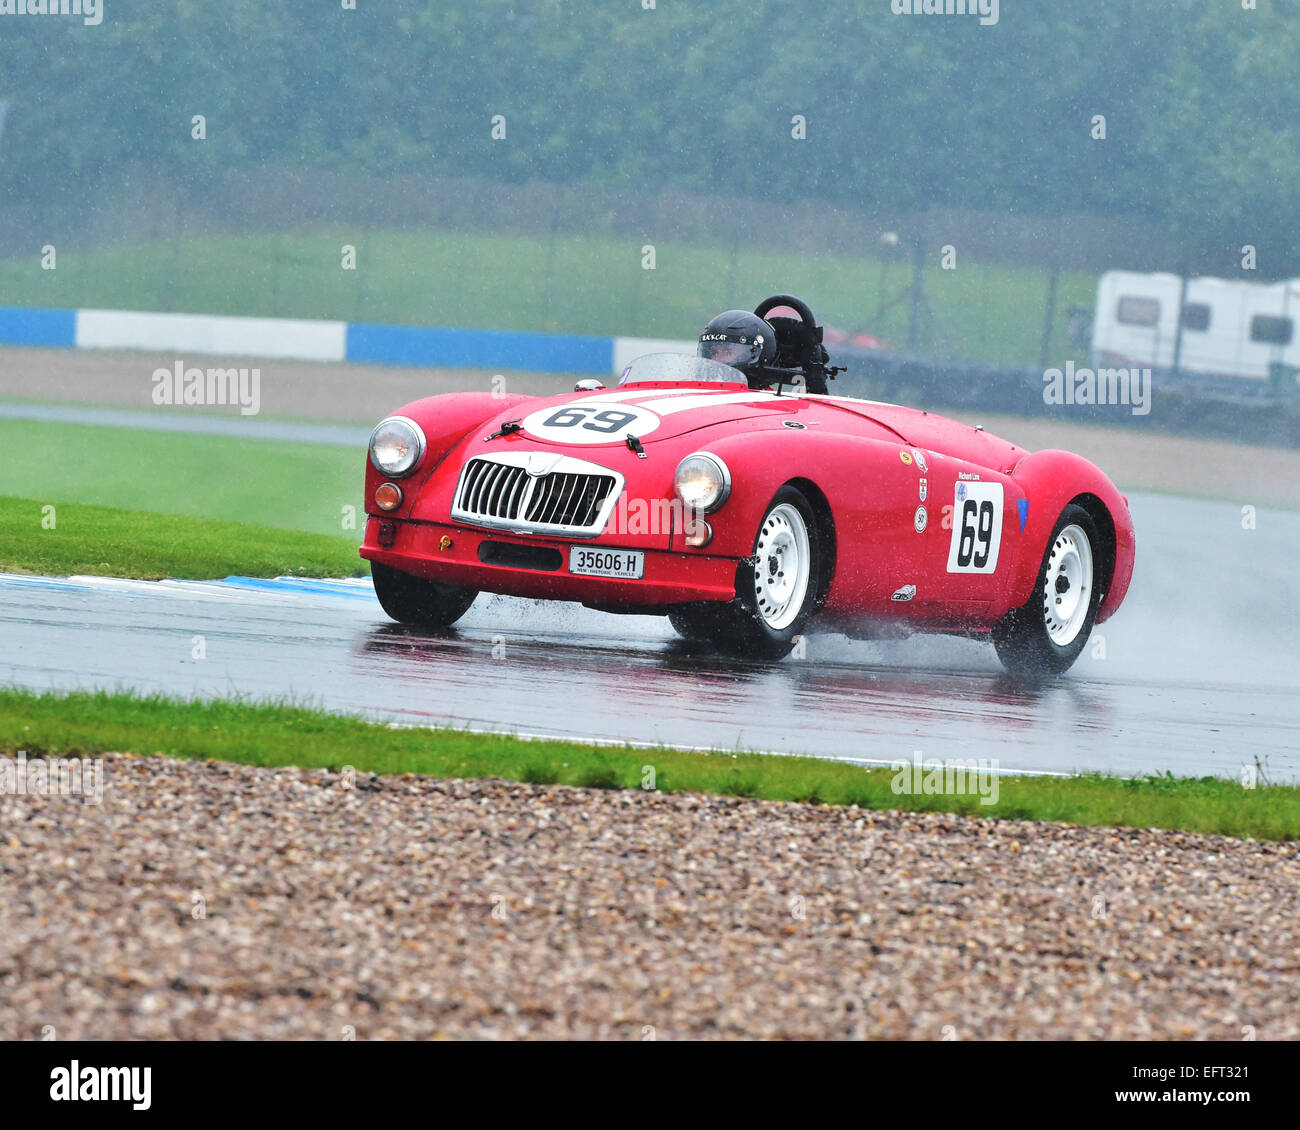 Richard Line, MG A, 35606 H, 50's Sports cars, Jaguar XK Challenge, June 2014 Donington. Stock Photo